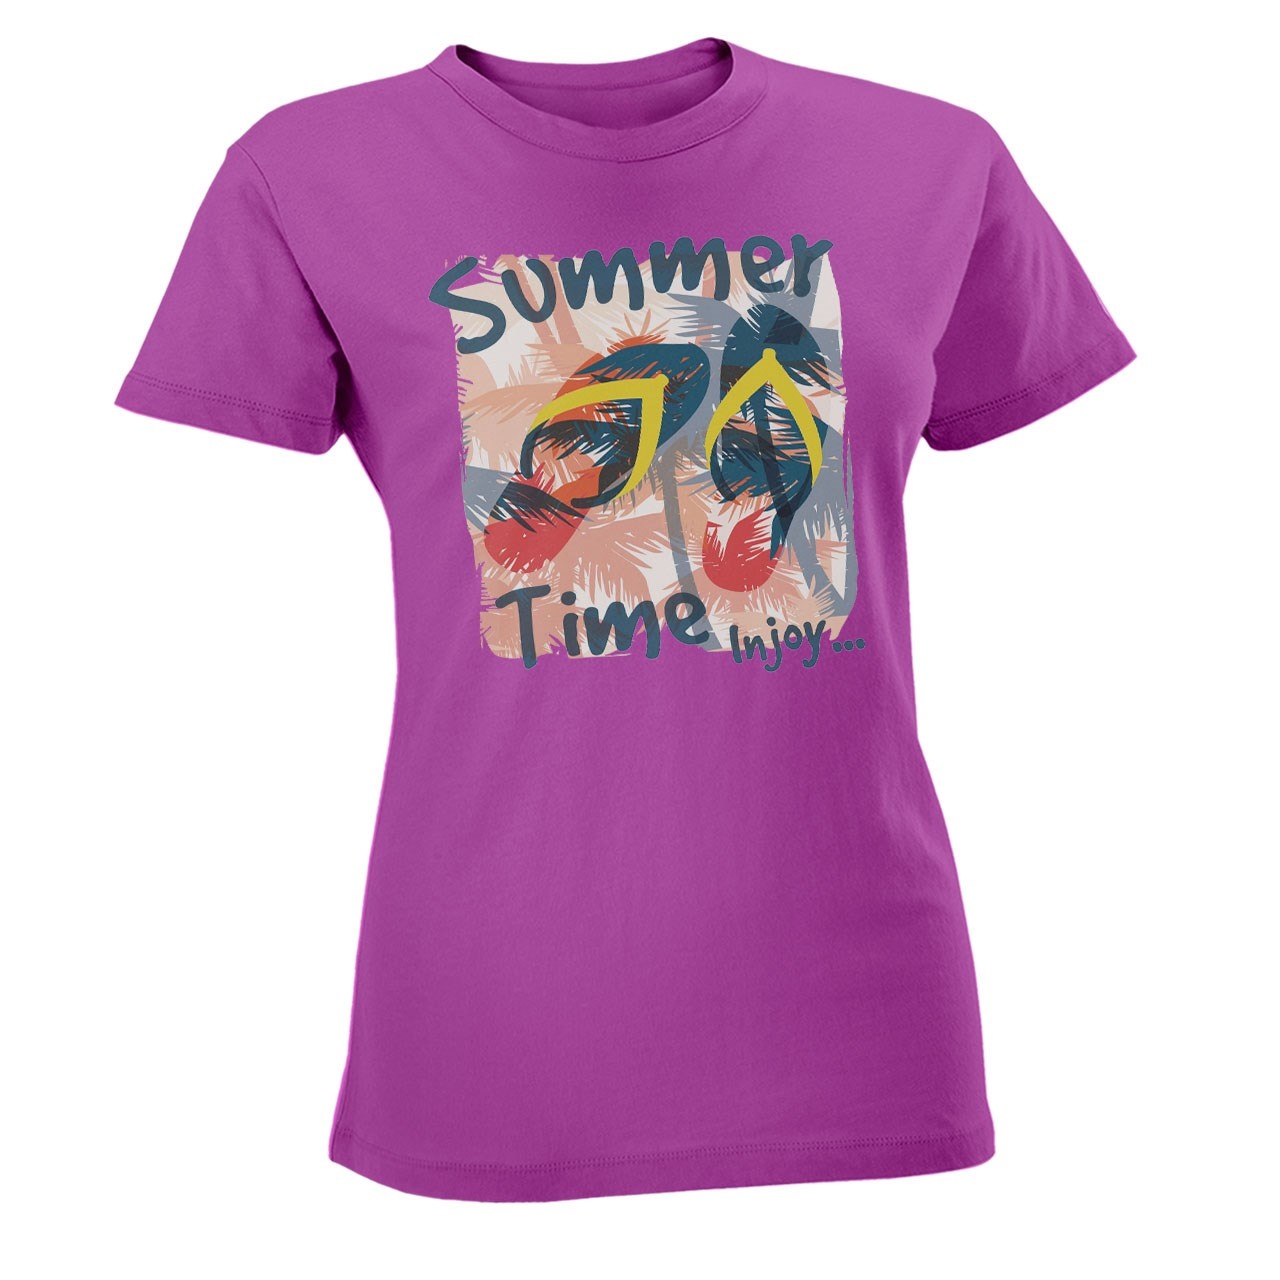 تی شرت نه مسترمانی مدل summer کد41